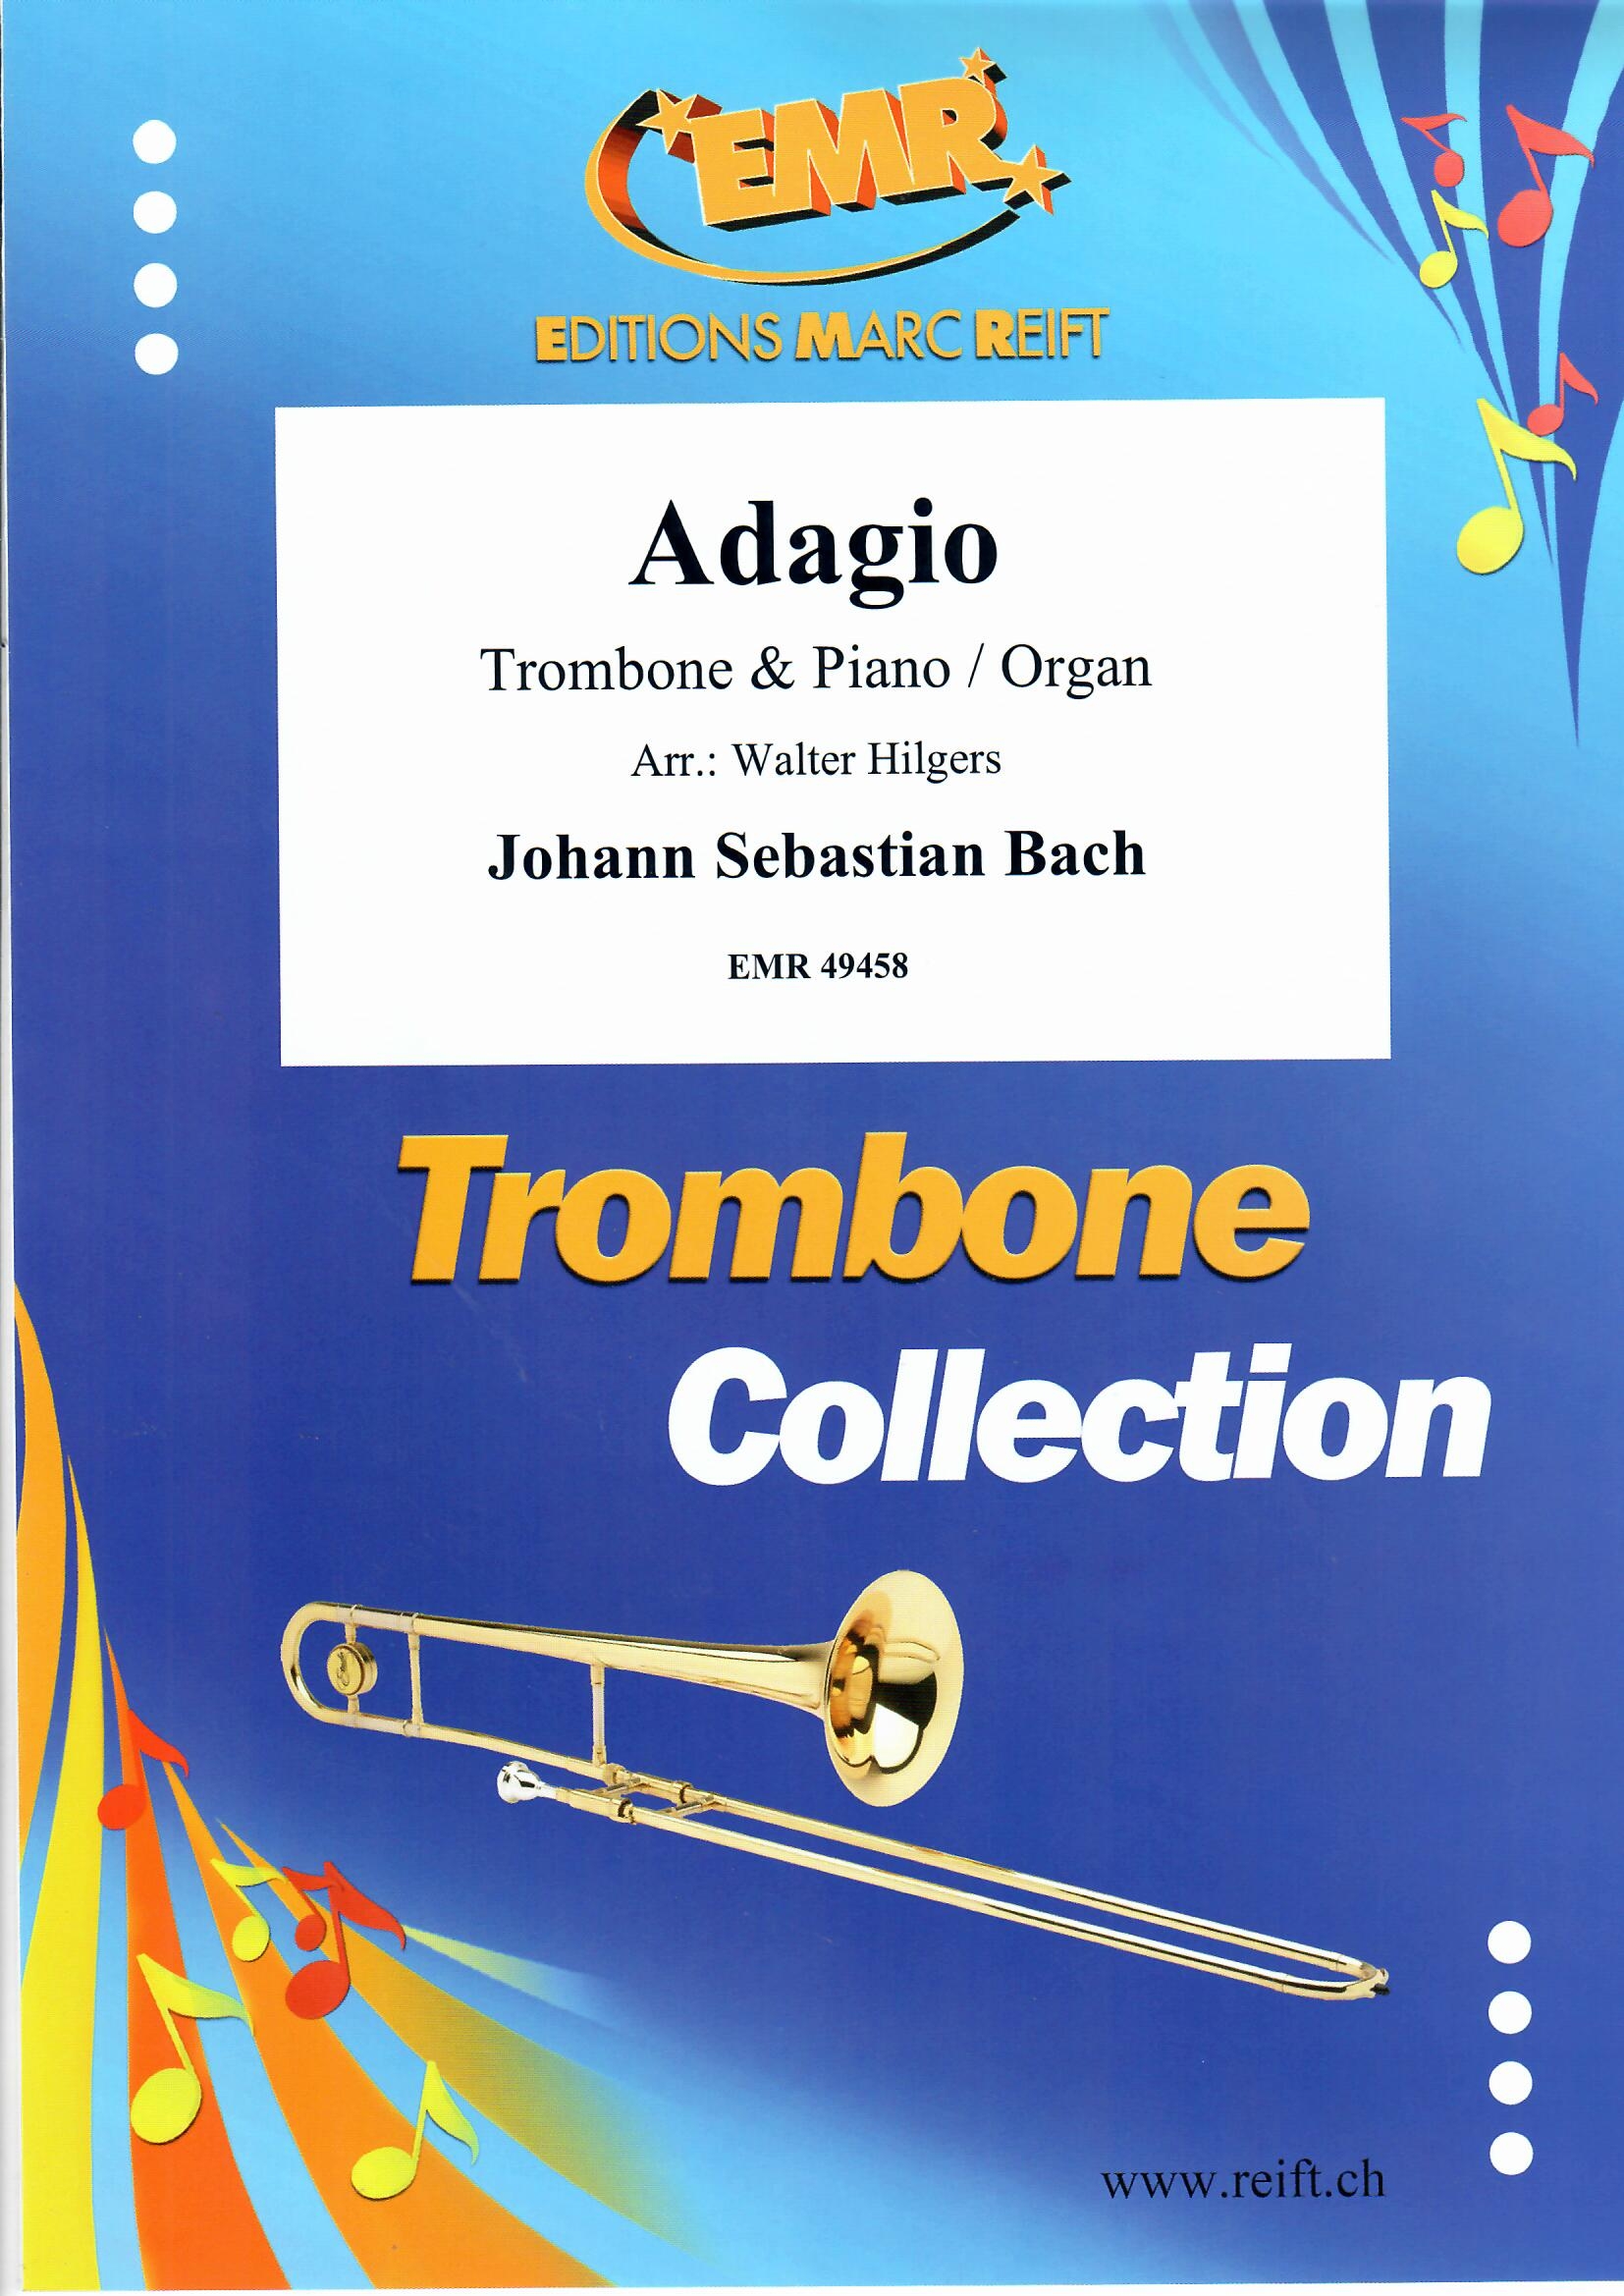 ADAGIO - Trombone & Piano, SOLOS - Trombone